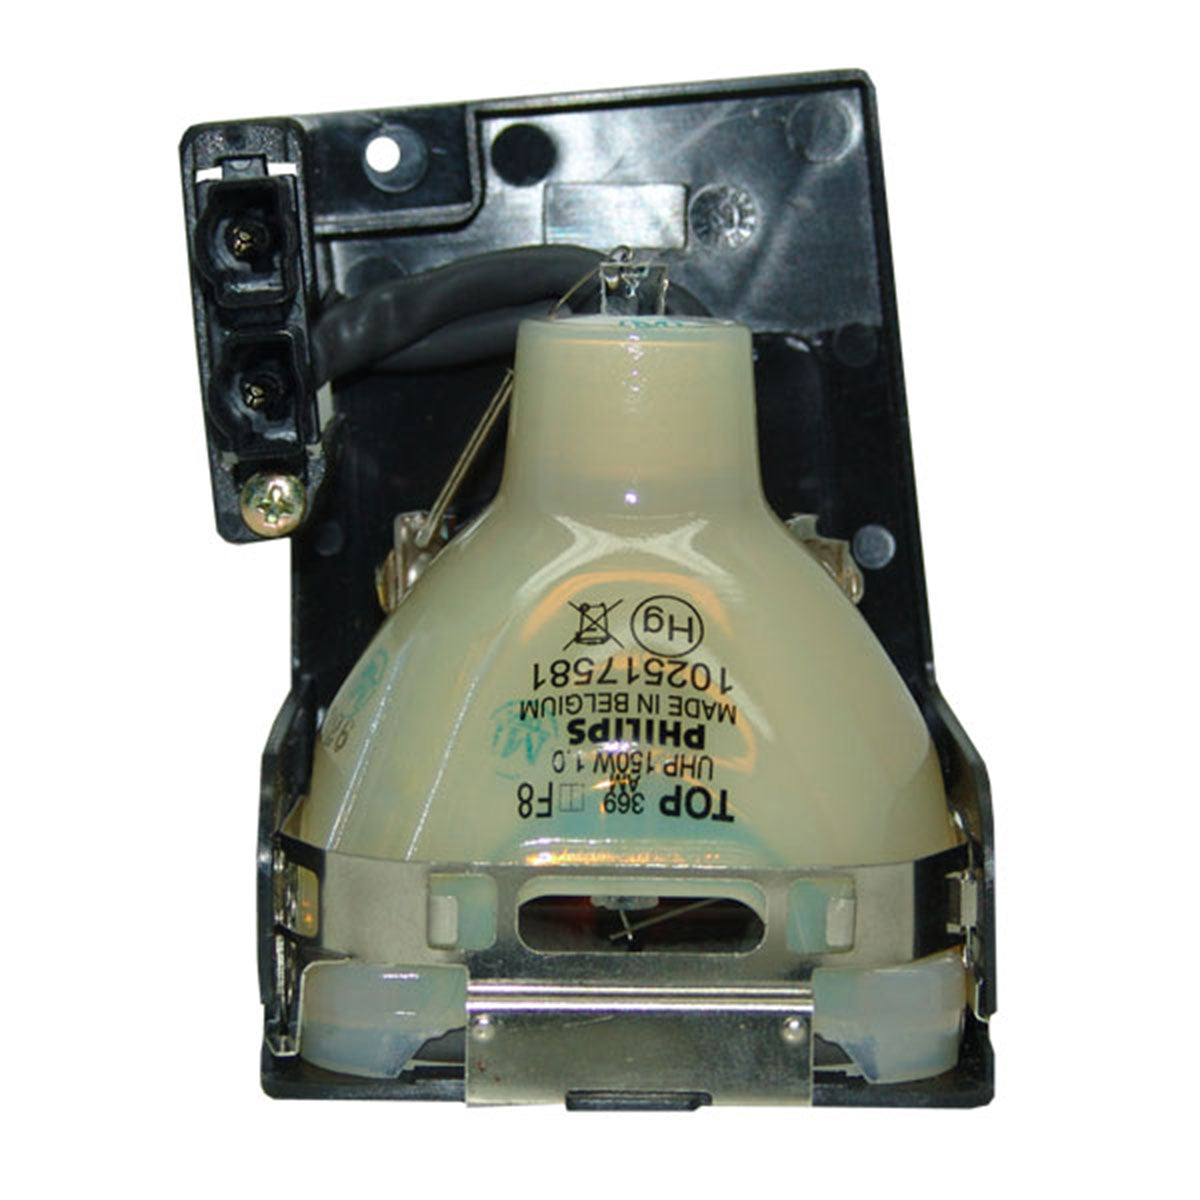 Sanyo POA-LMP36 Philips Projector Lamp Module